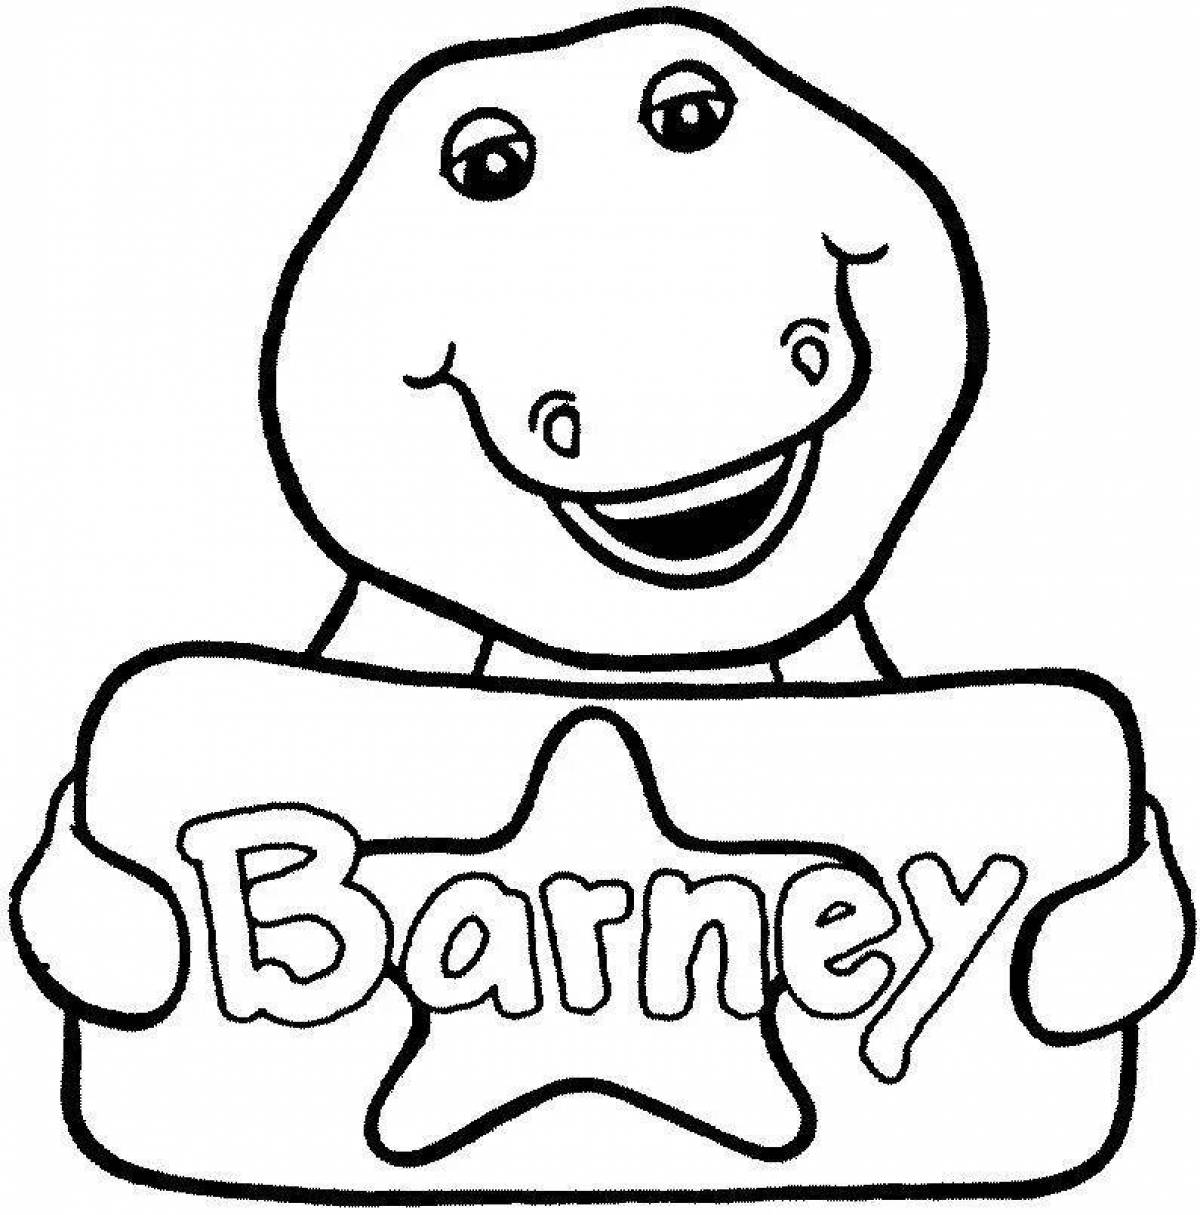 Barney holiday coloring